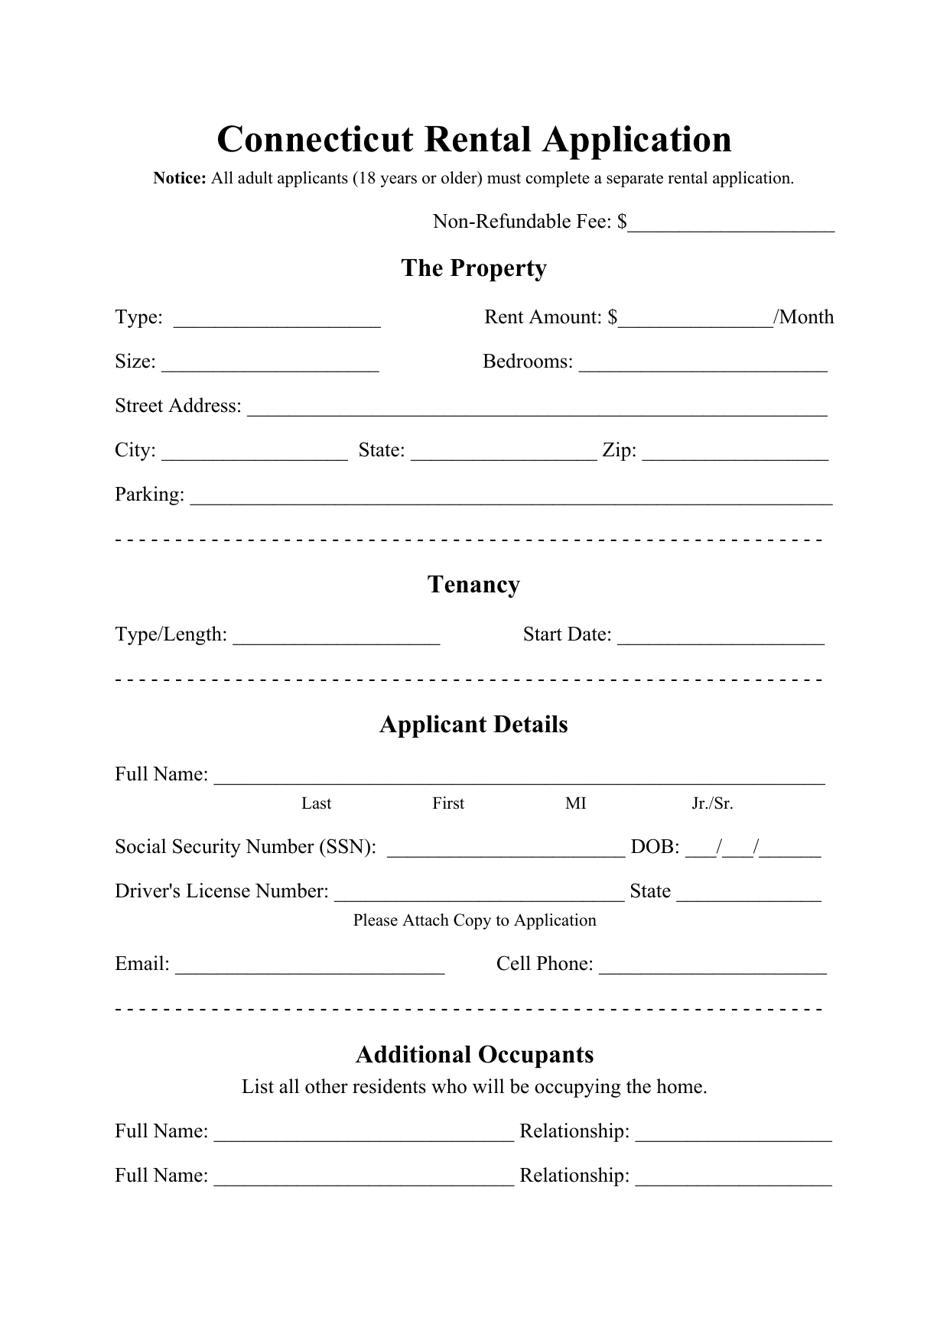 Rental Application Form - Connecticut, Page 1